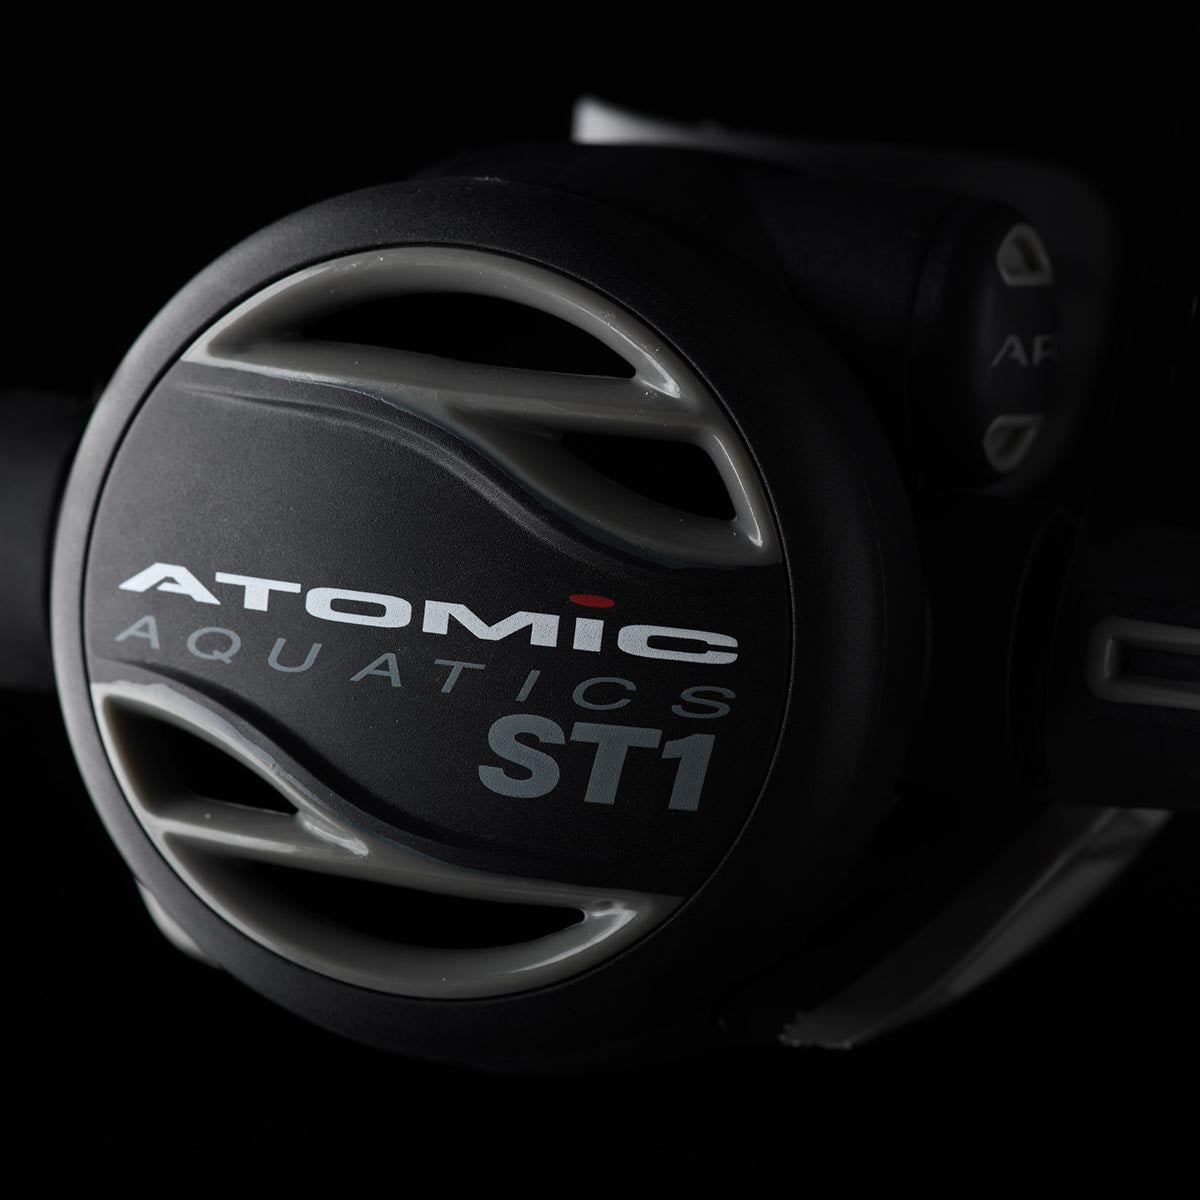 Atomic Aquatics ST1 Regulator Yoke Sealed Set w/ ST1 Color Kit Included